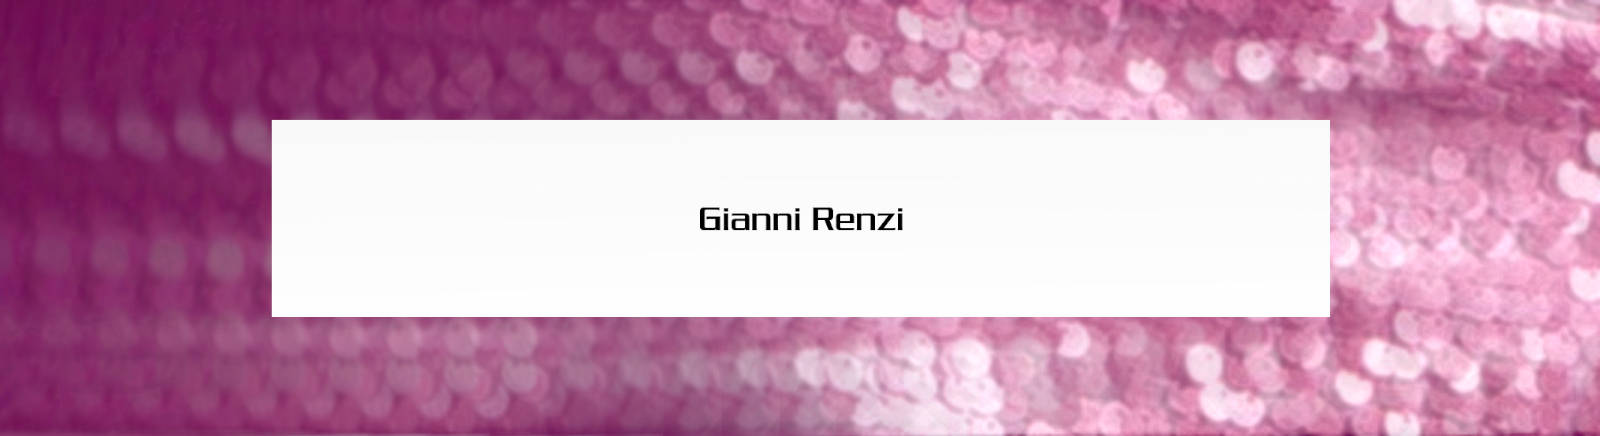 Prange: Gianni Renzi Ballerinas online kaufen online shoppen